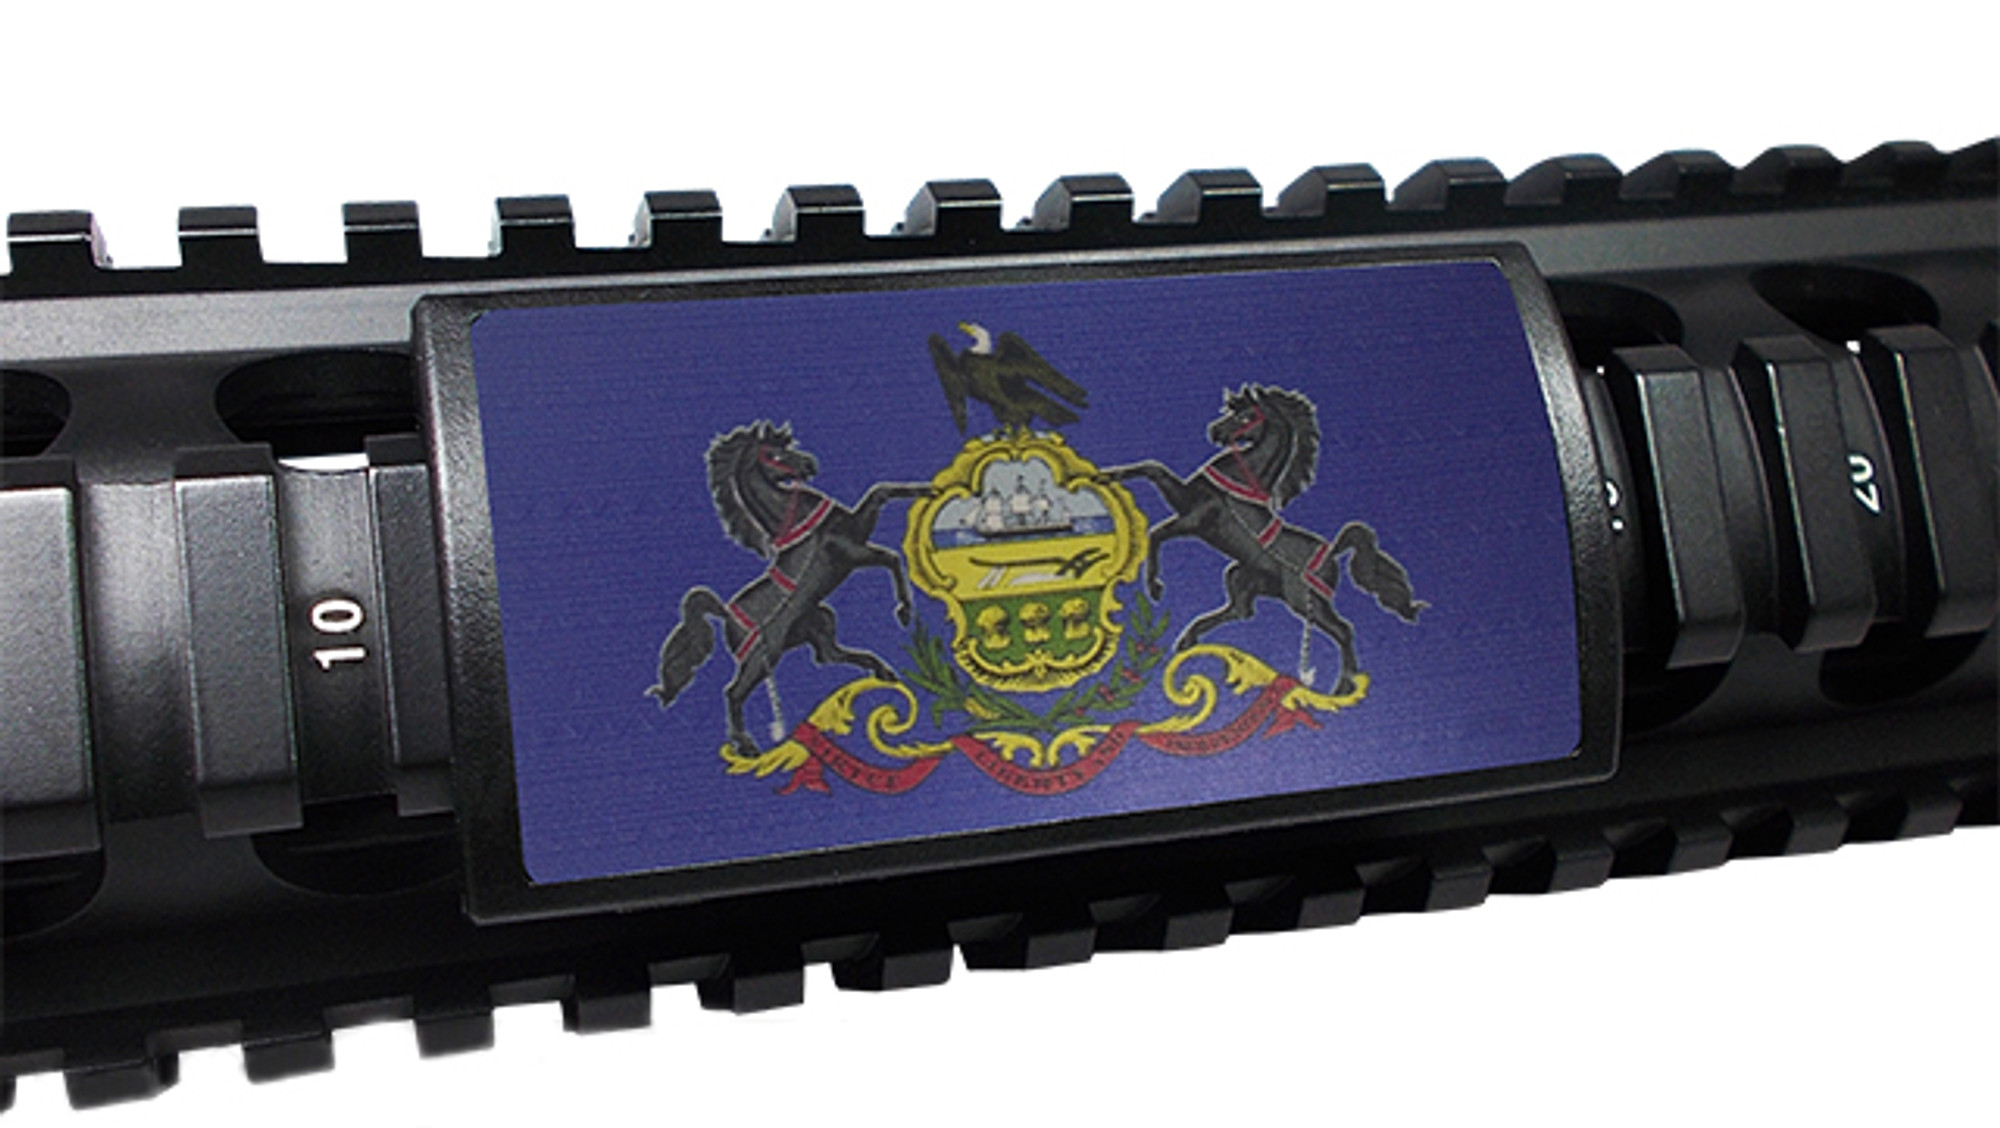 Custom Gun Rails (CGR) Large Aluminum Rail Cover - Pennsylvania State Flag